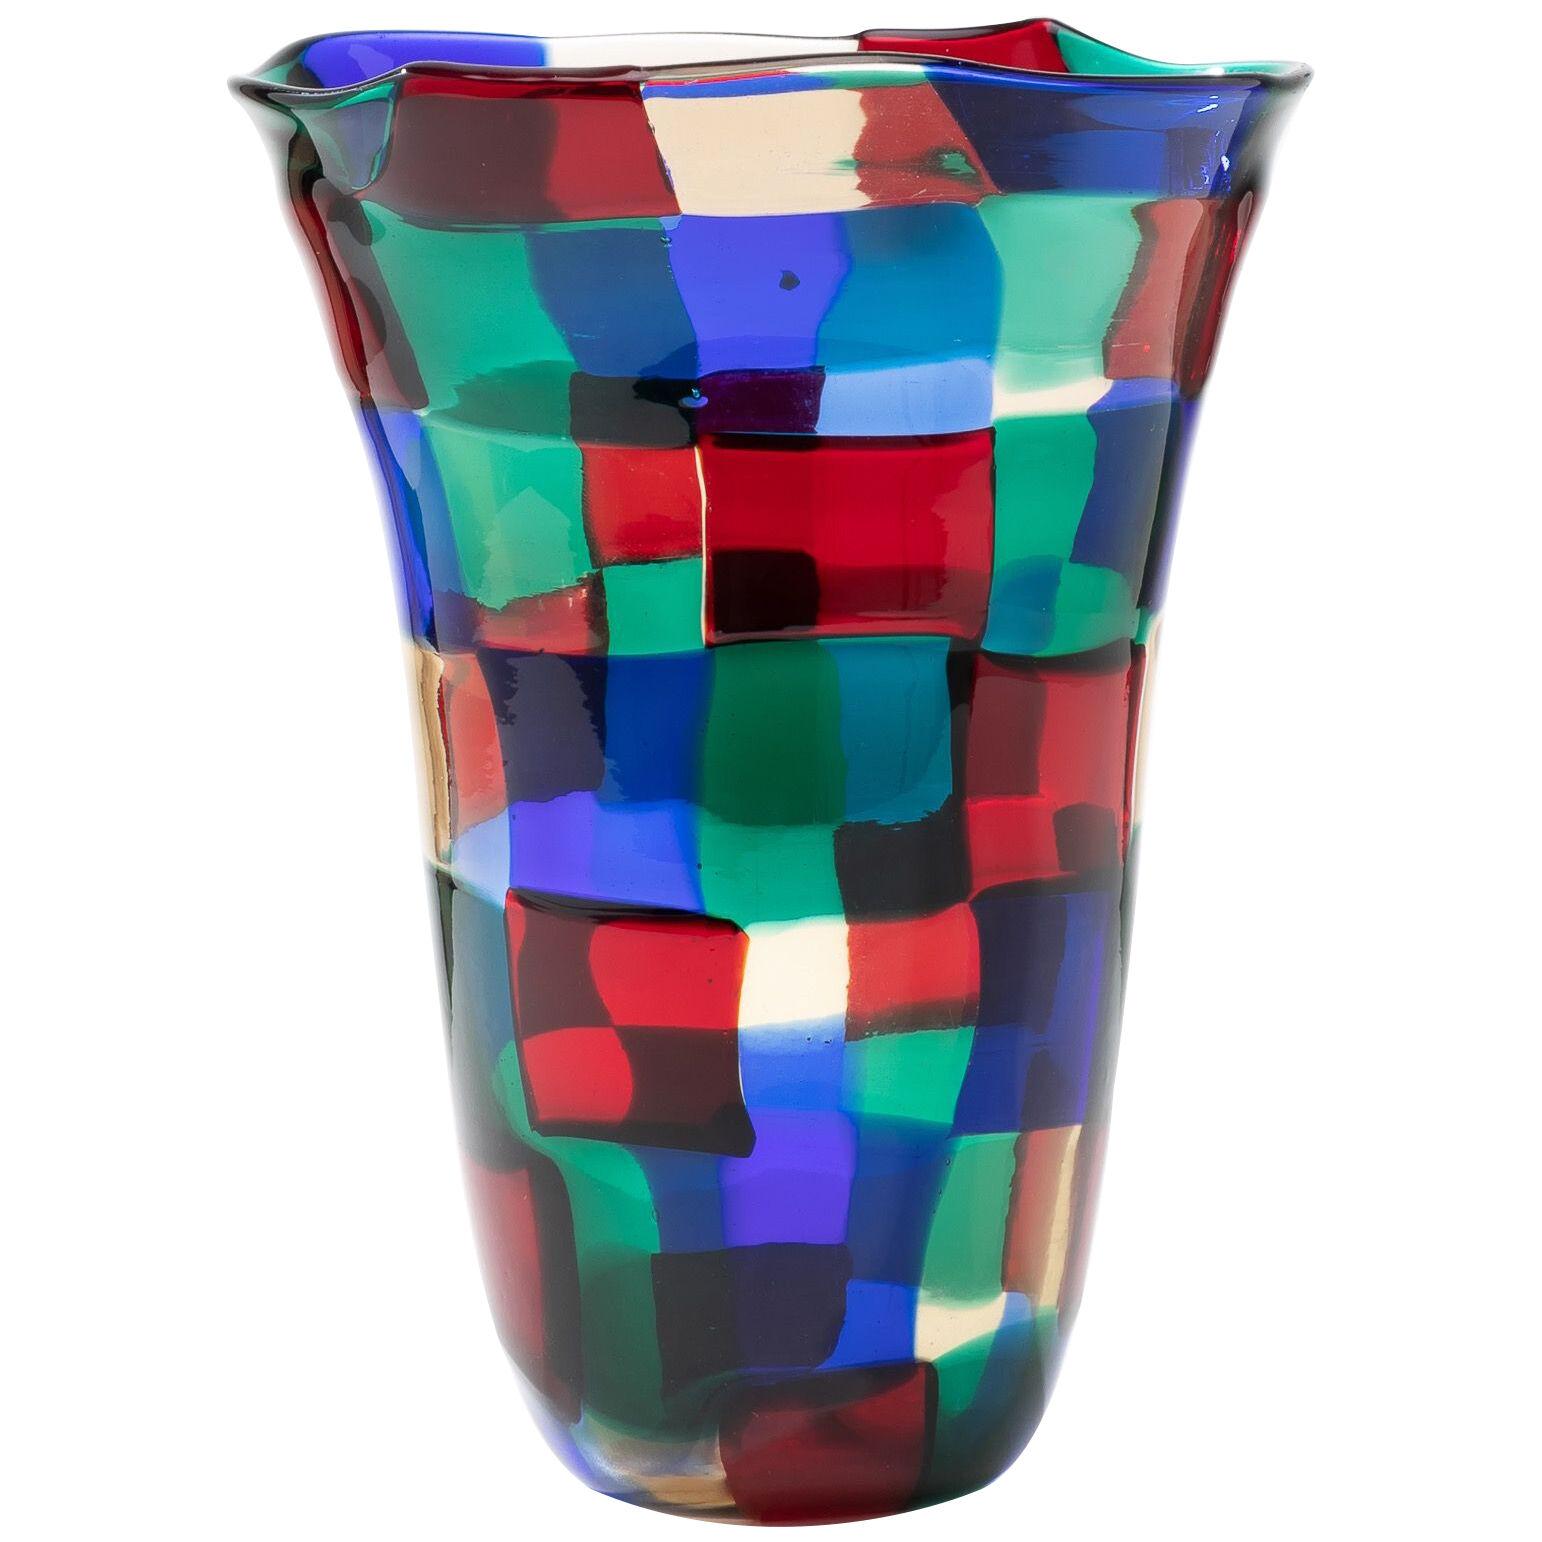 Pezzato vase by Fulvio Bianconi – color variant “Parigi” – Venini